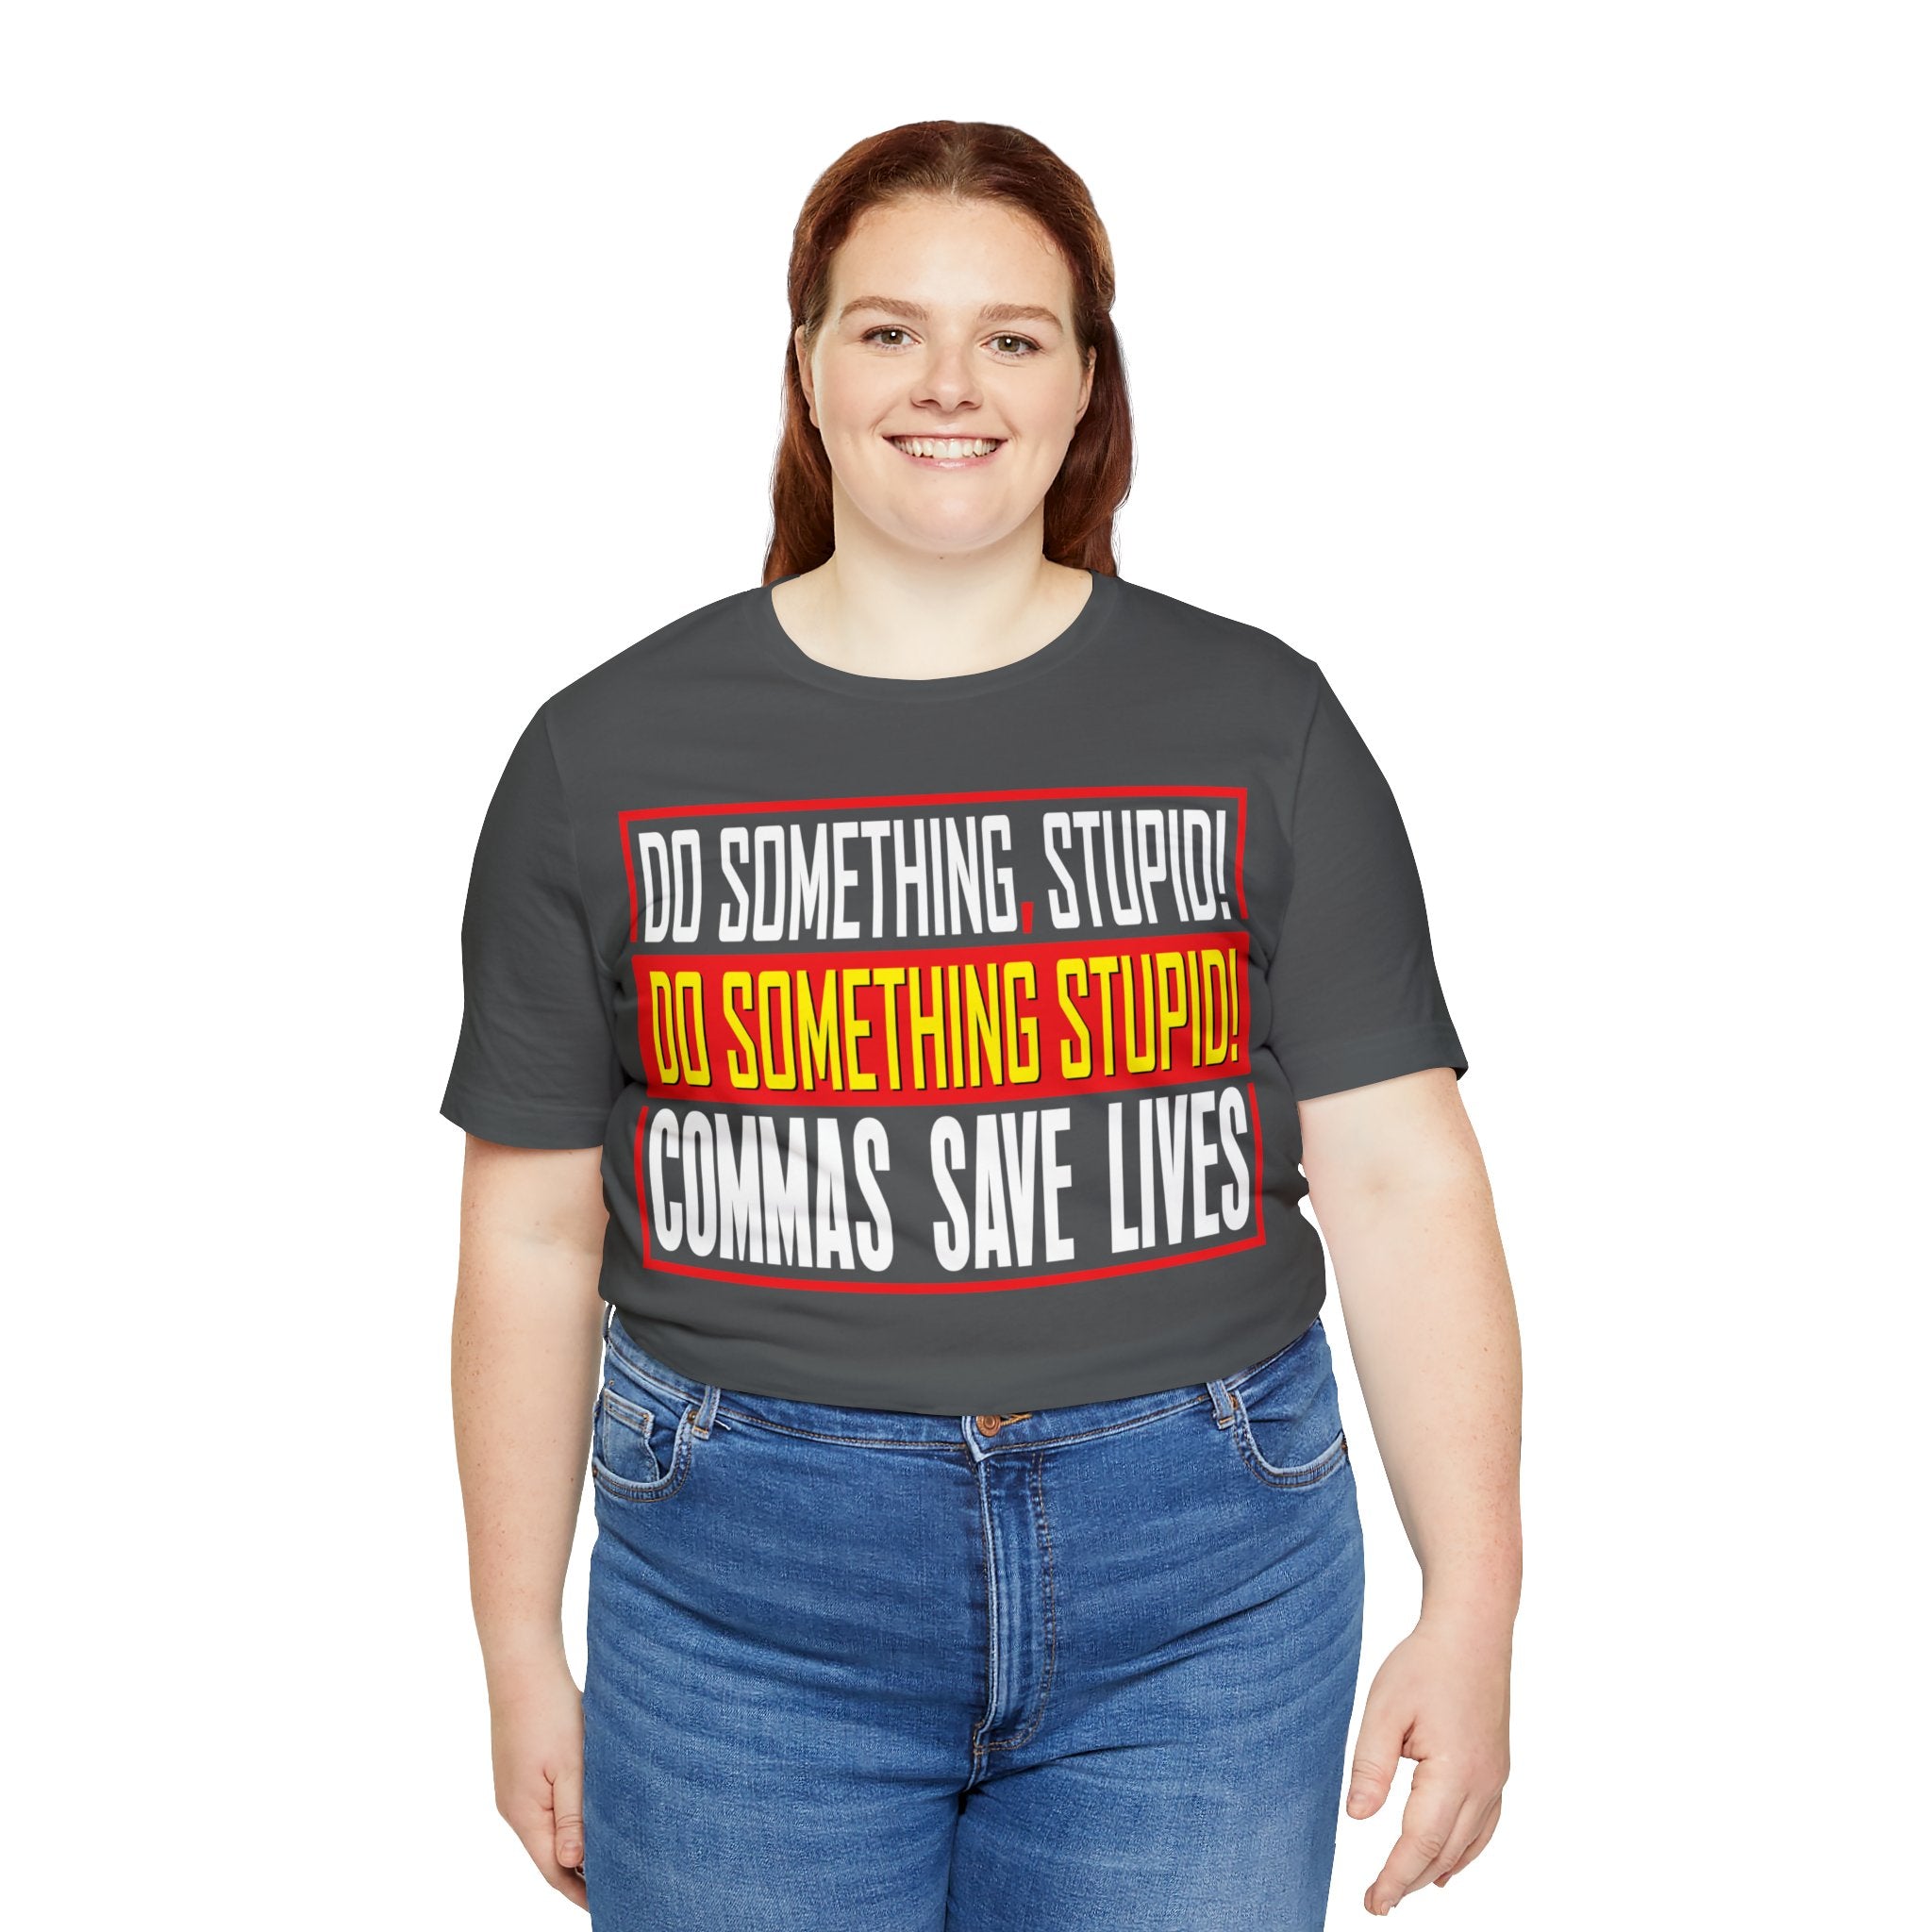 Commas Save Lives - Stupid